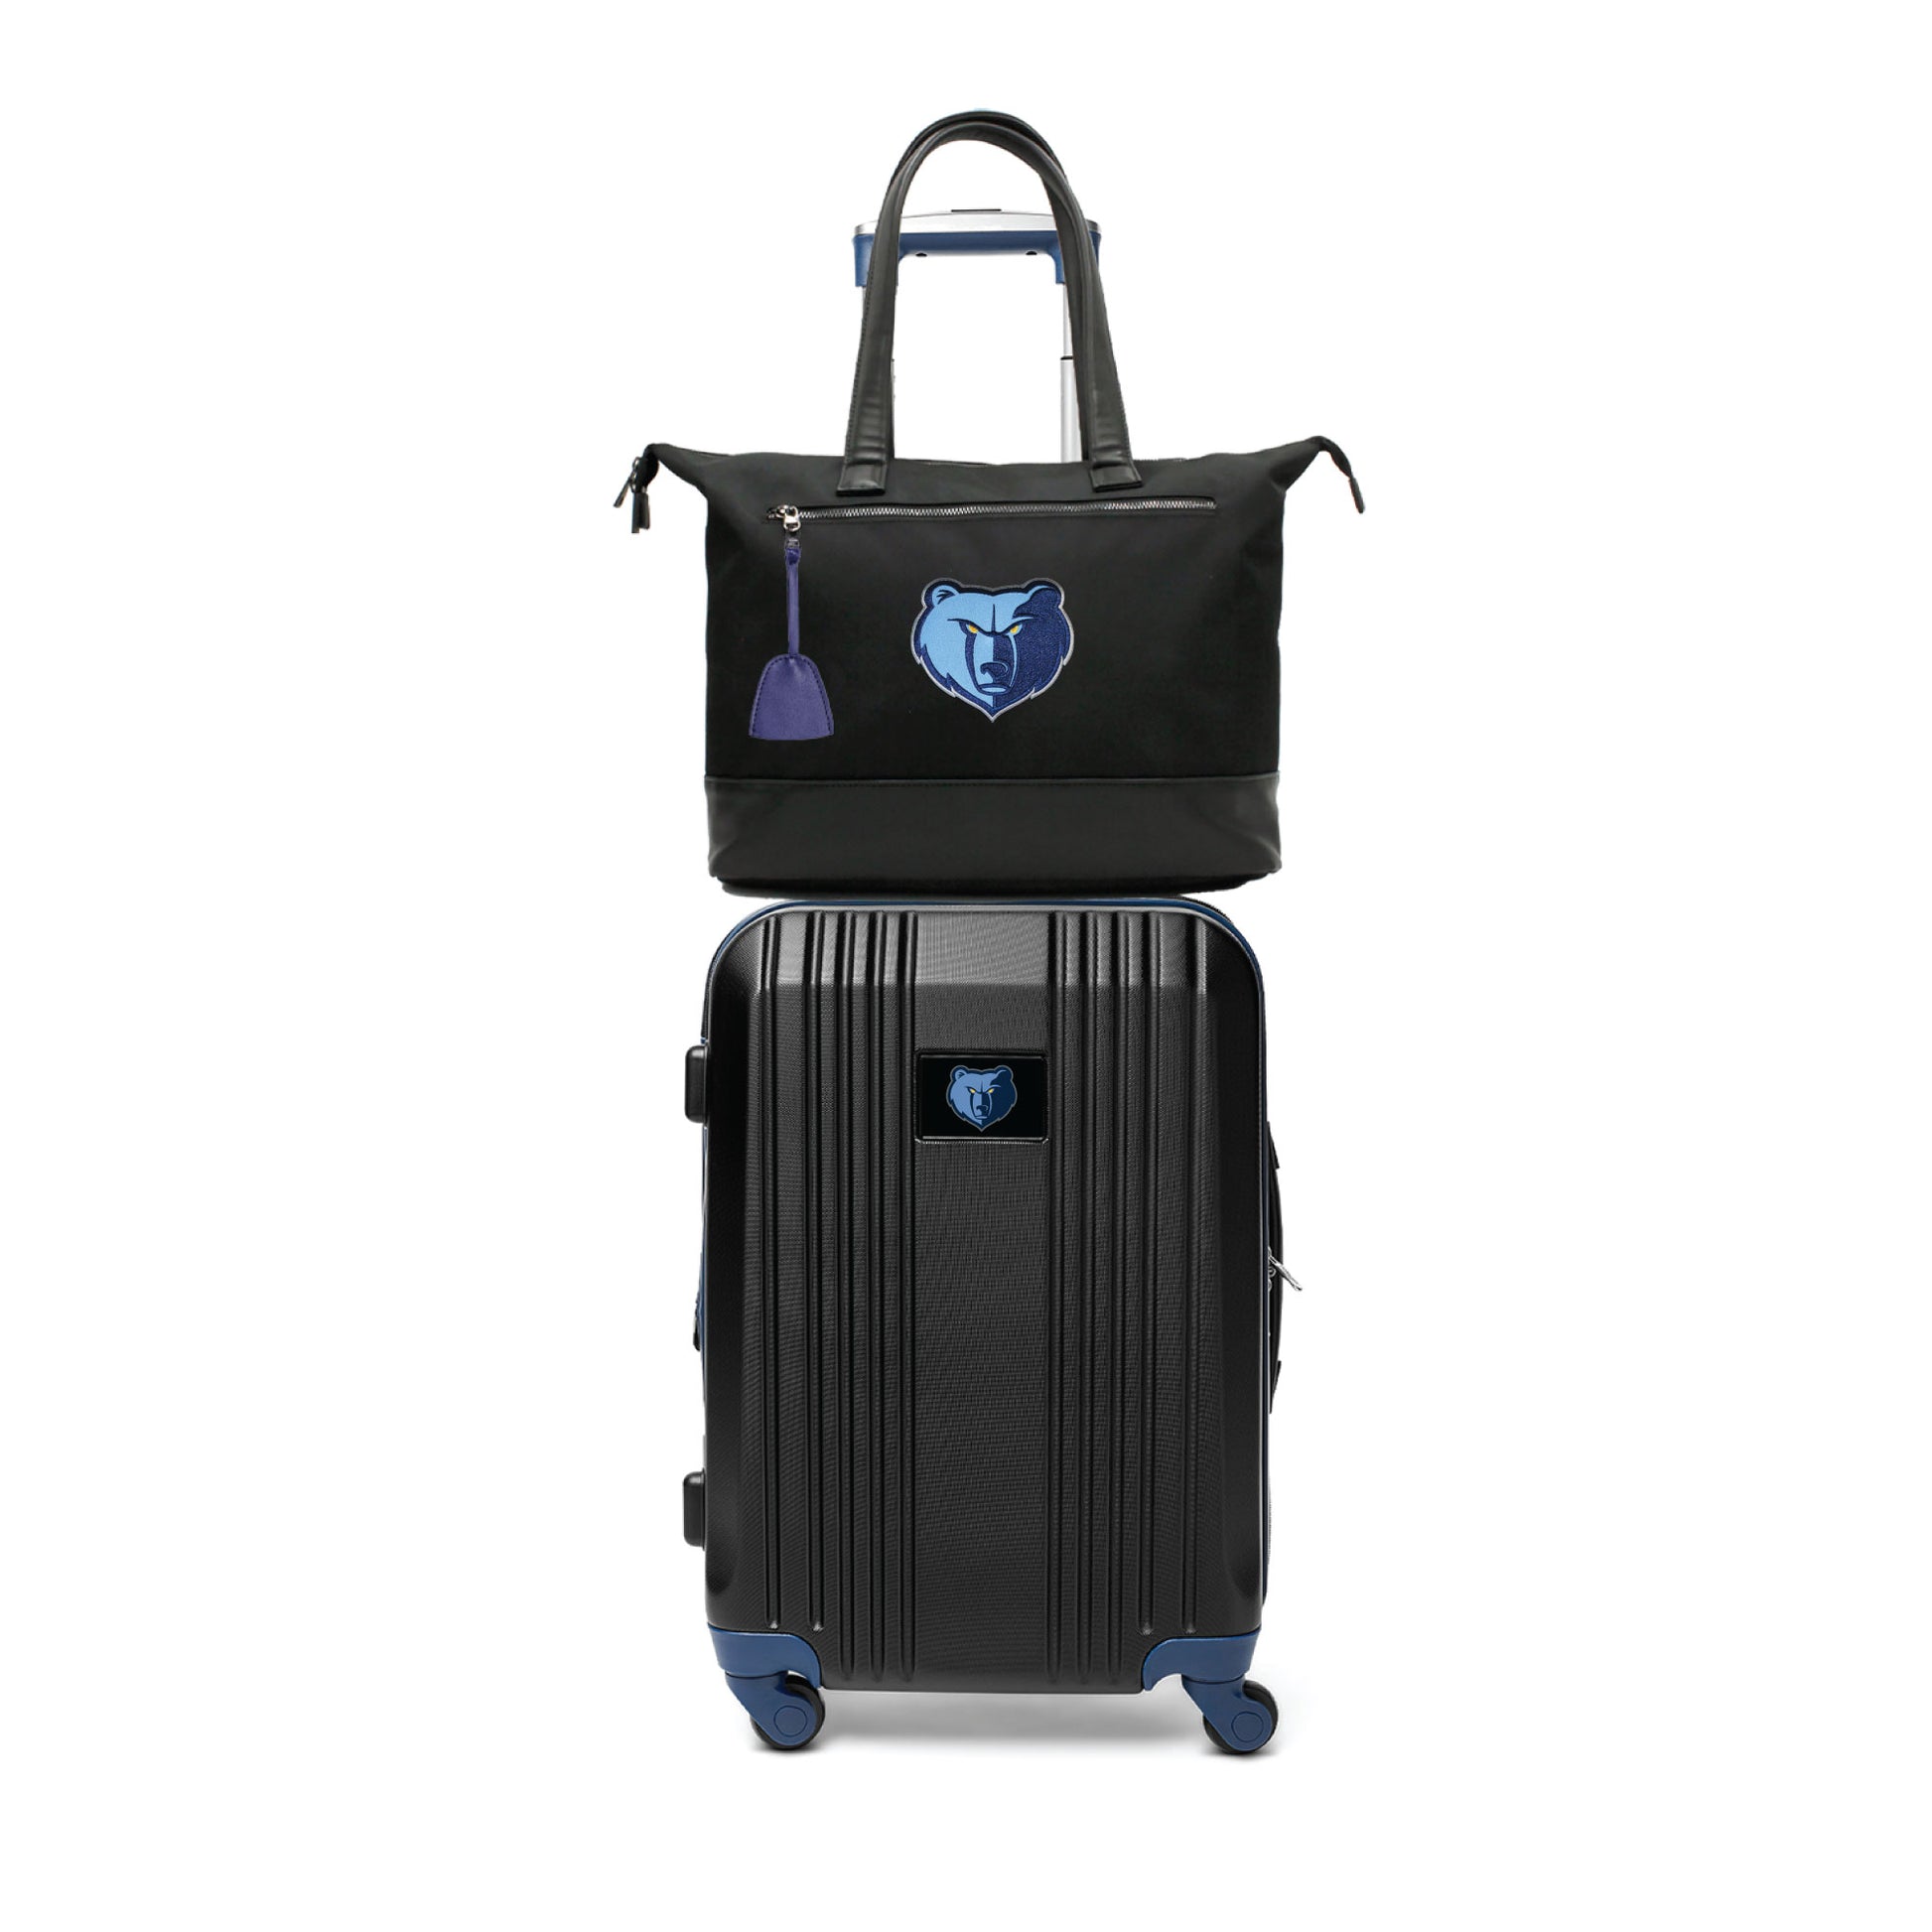 Memphis Grizzlies Premium Laptop Tote Bag and Luggage Set